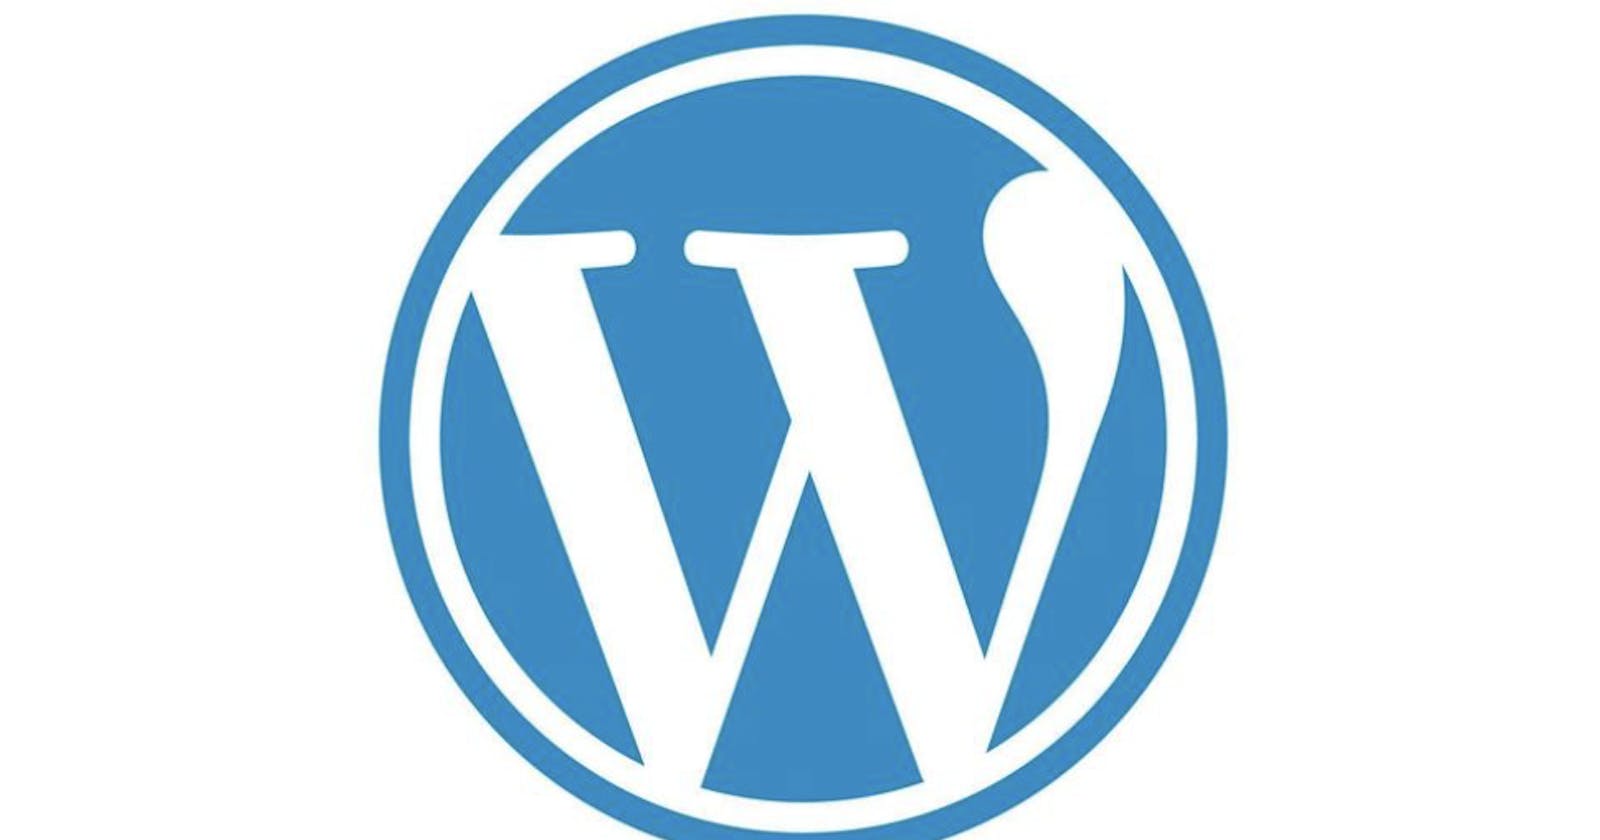 LAMP: Install and setup Wordpress automatically with IaC.